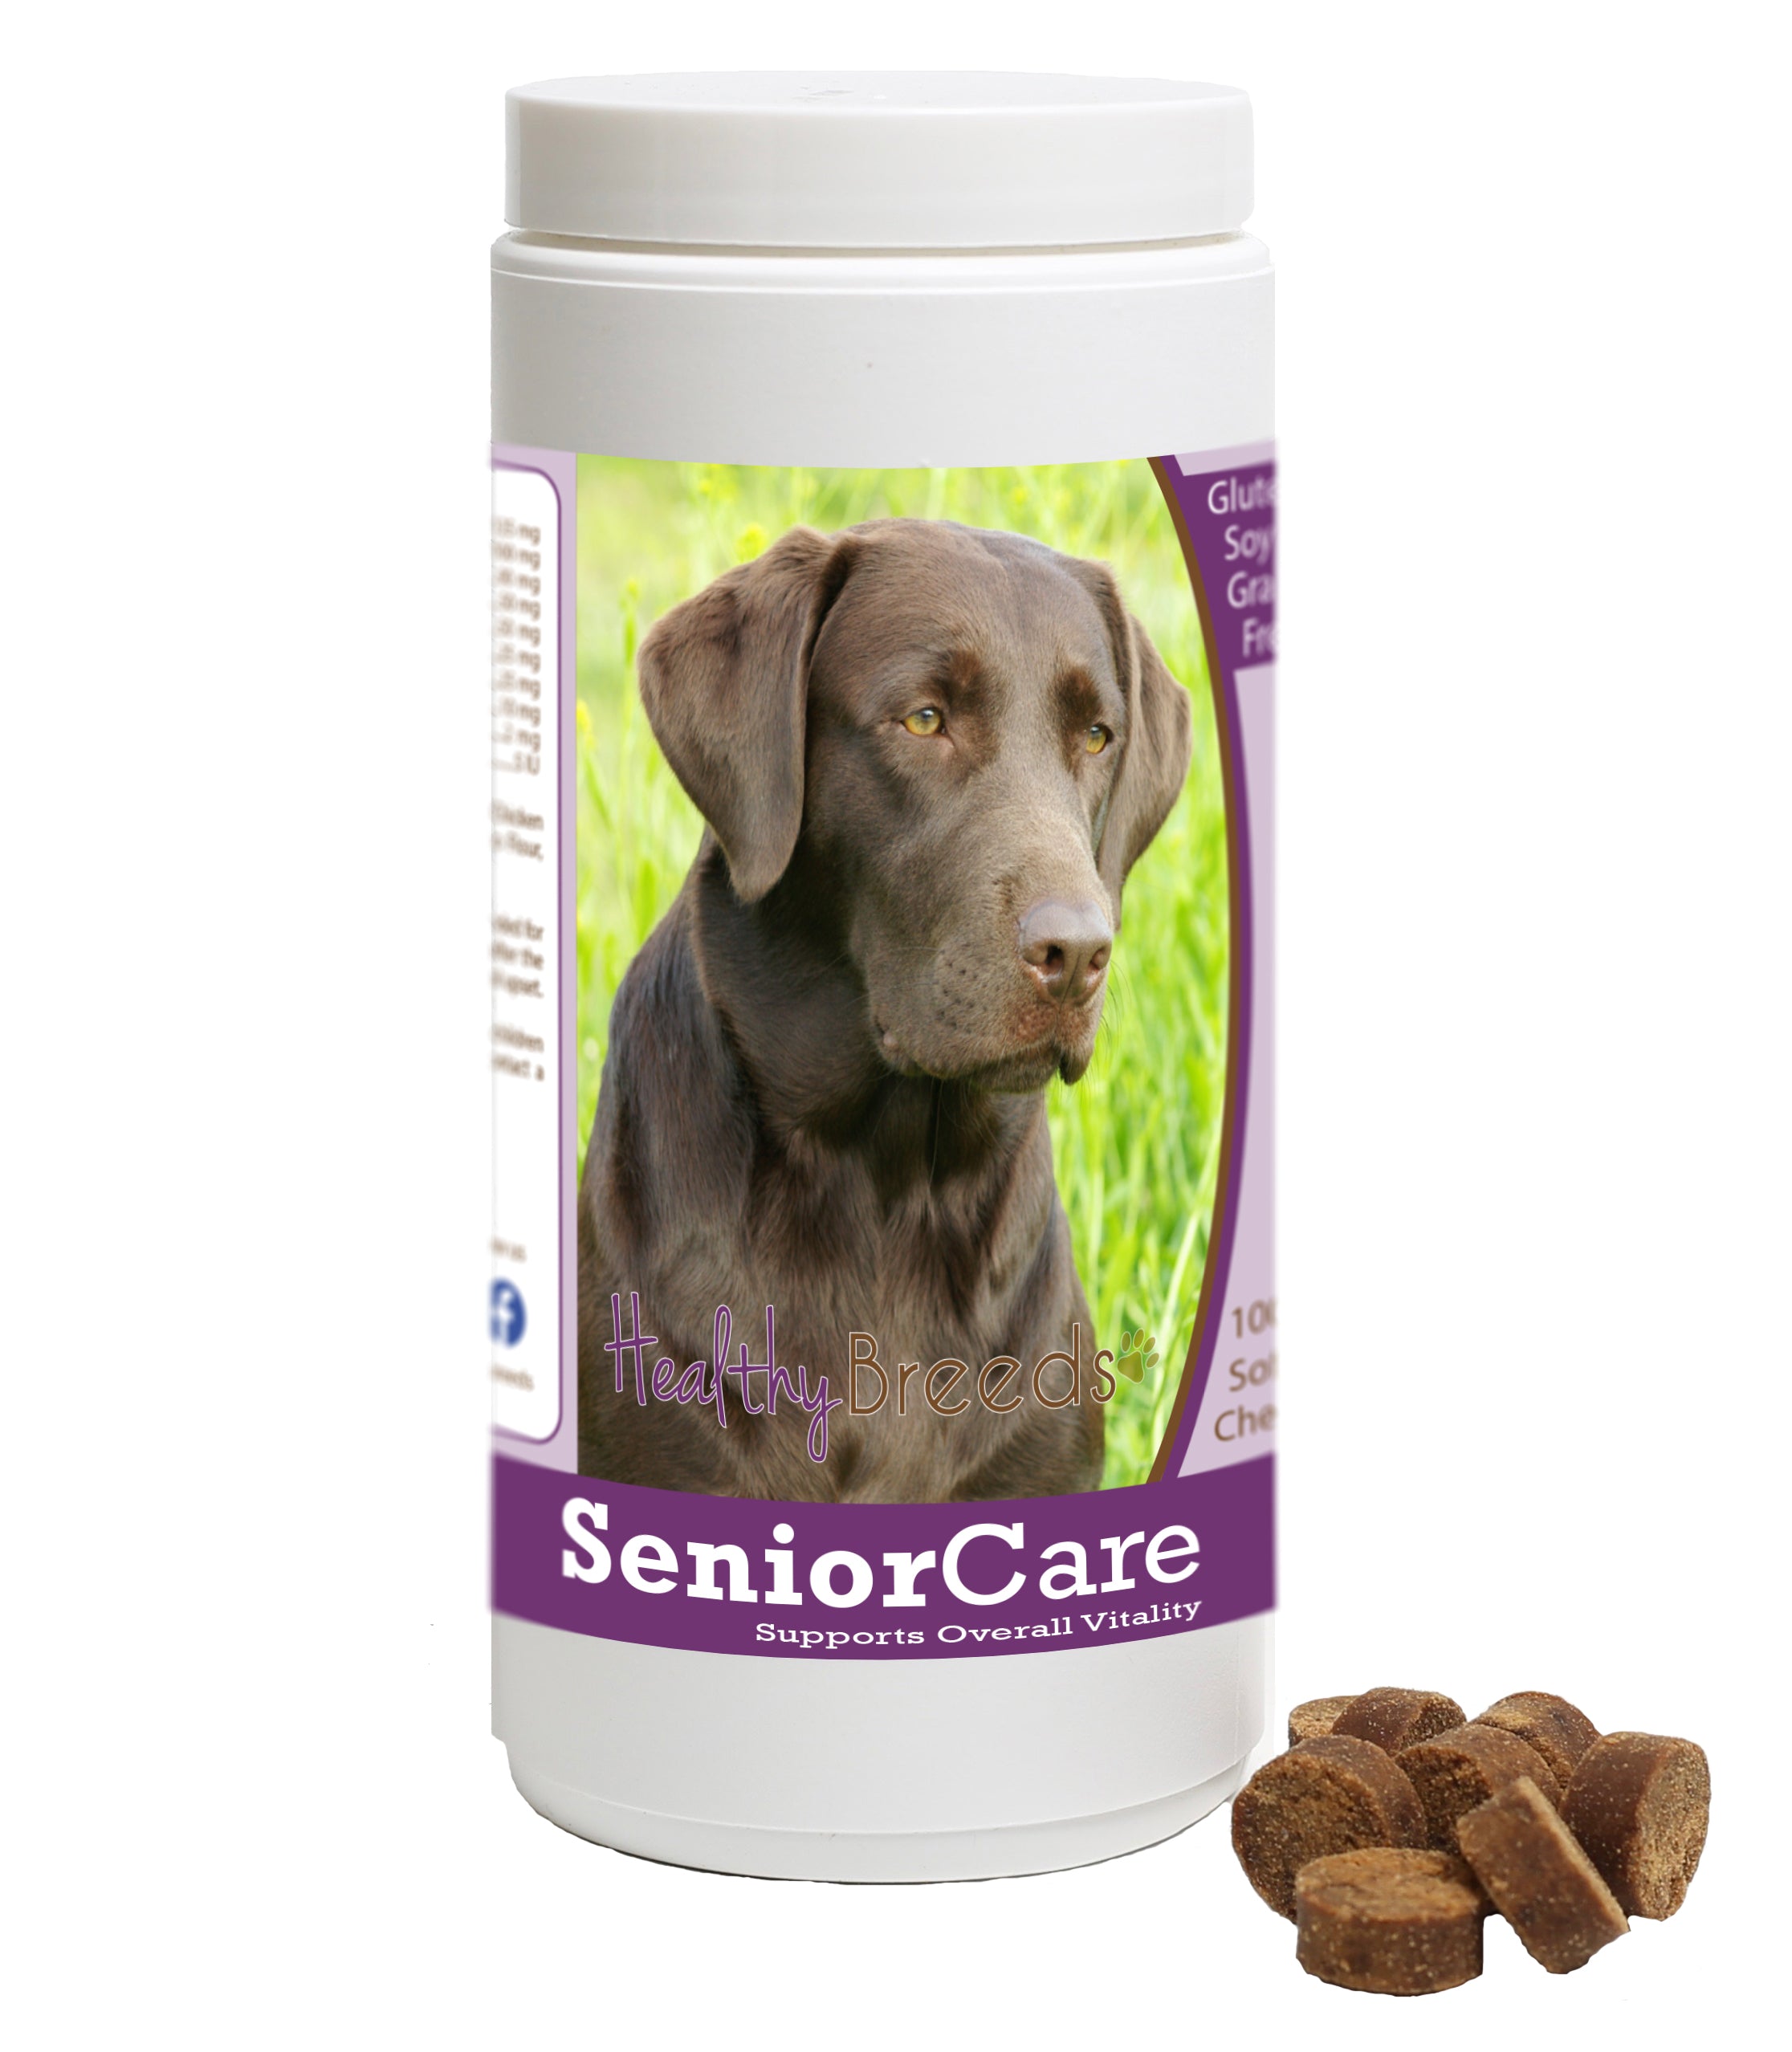 Healthy Breeds Senior Dog Care Soft Chews - Saint Bernard